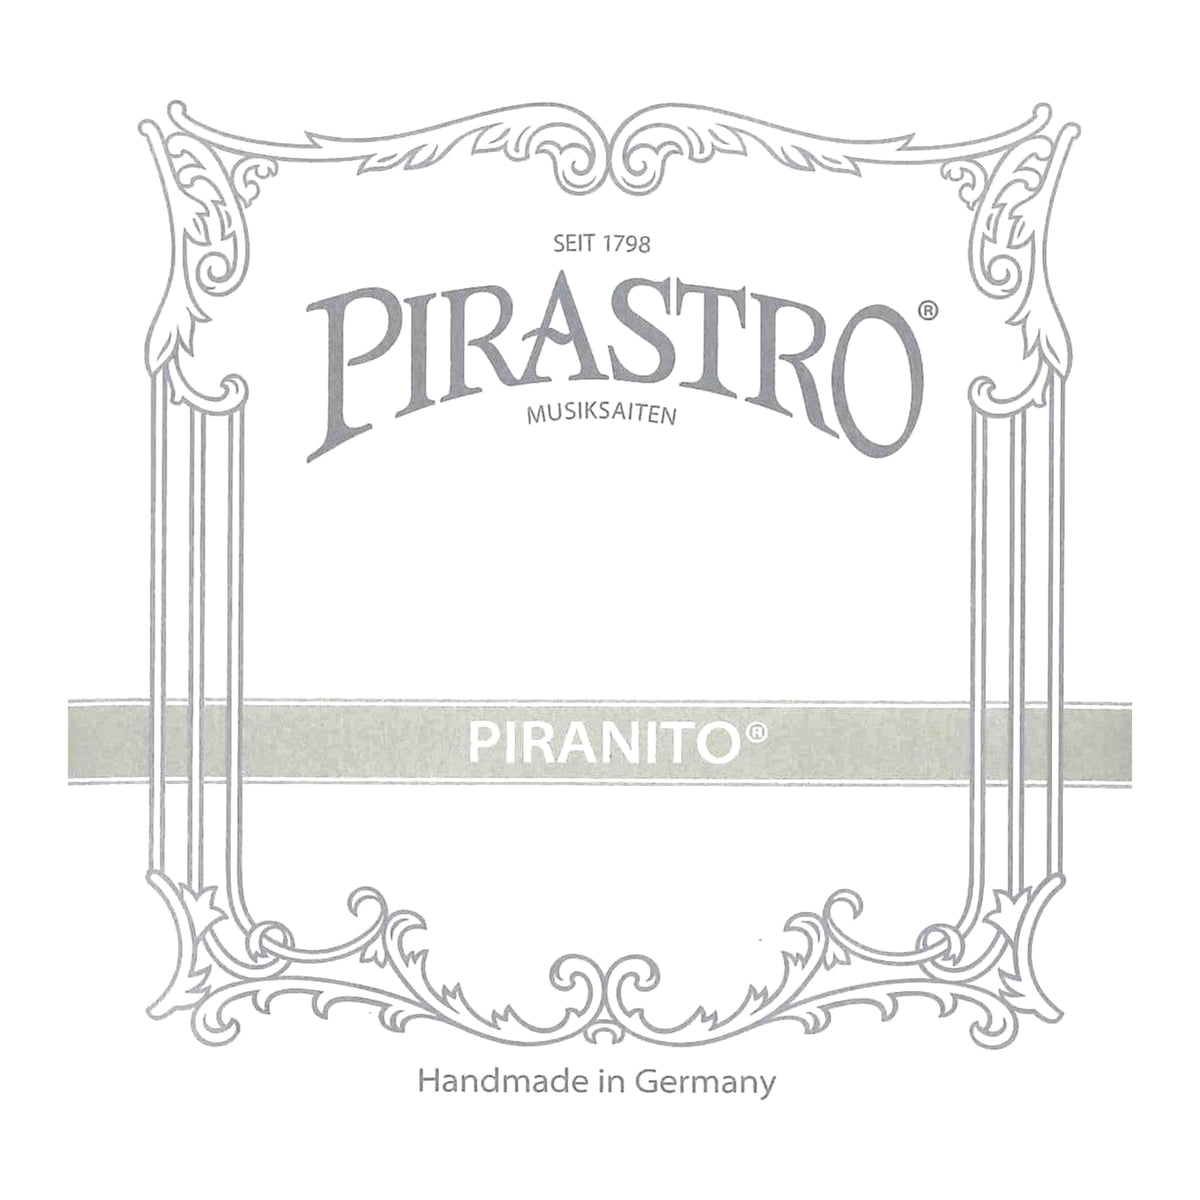 Pirastro Piranto 4/4 Size Single A Cello String